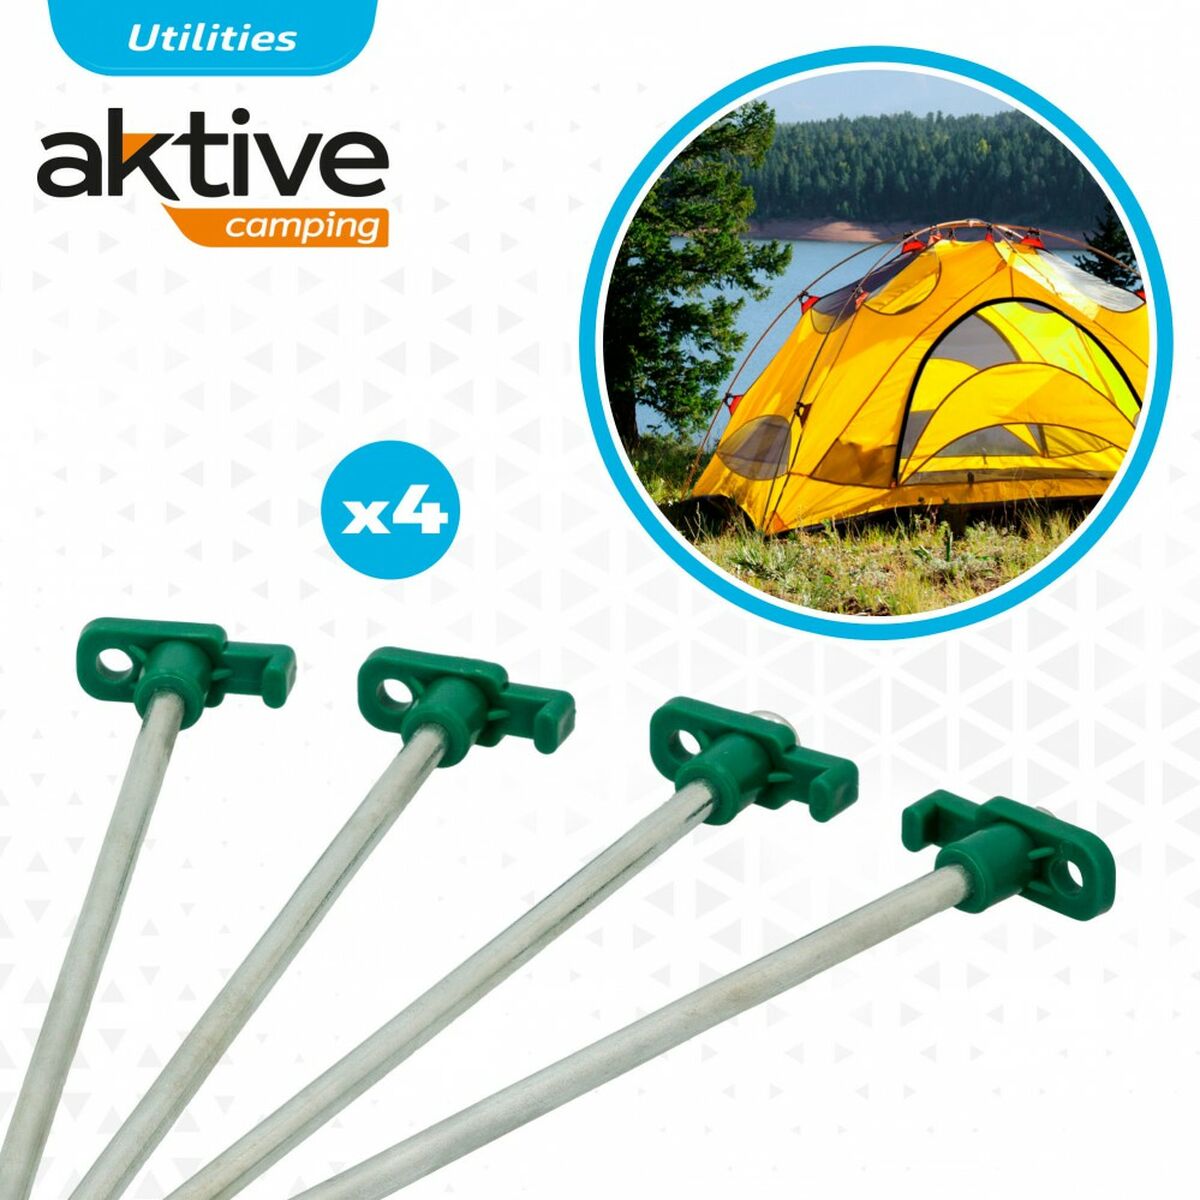 Spitzhacke für Camping Aktive 25 cm 4 Stücke Ø 8 mm (24 Stück)